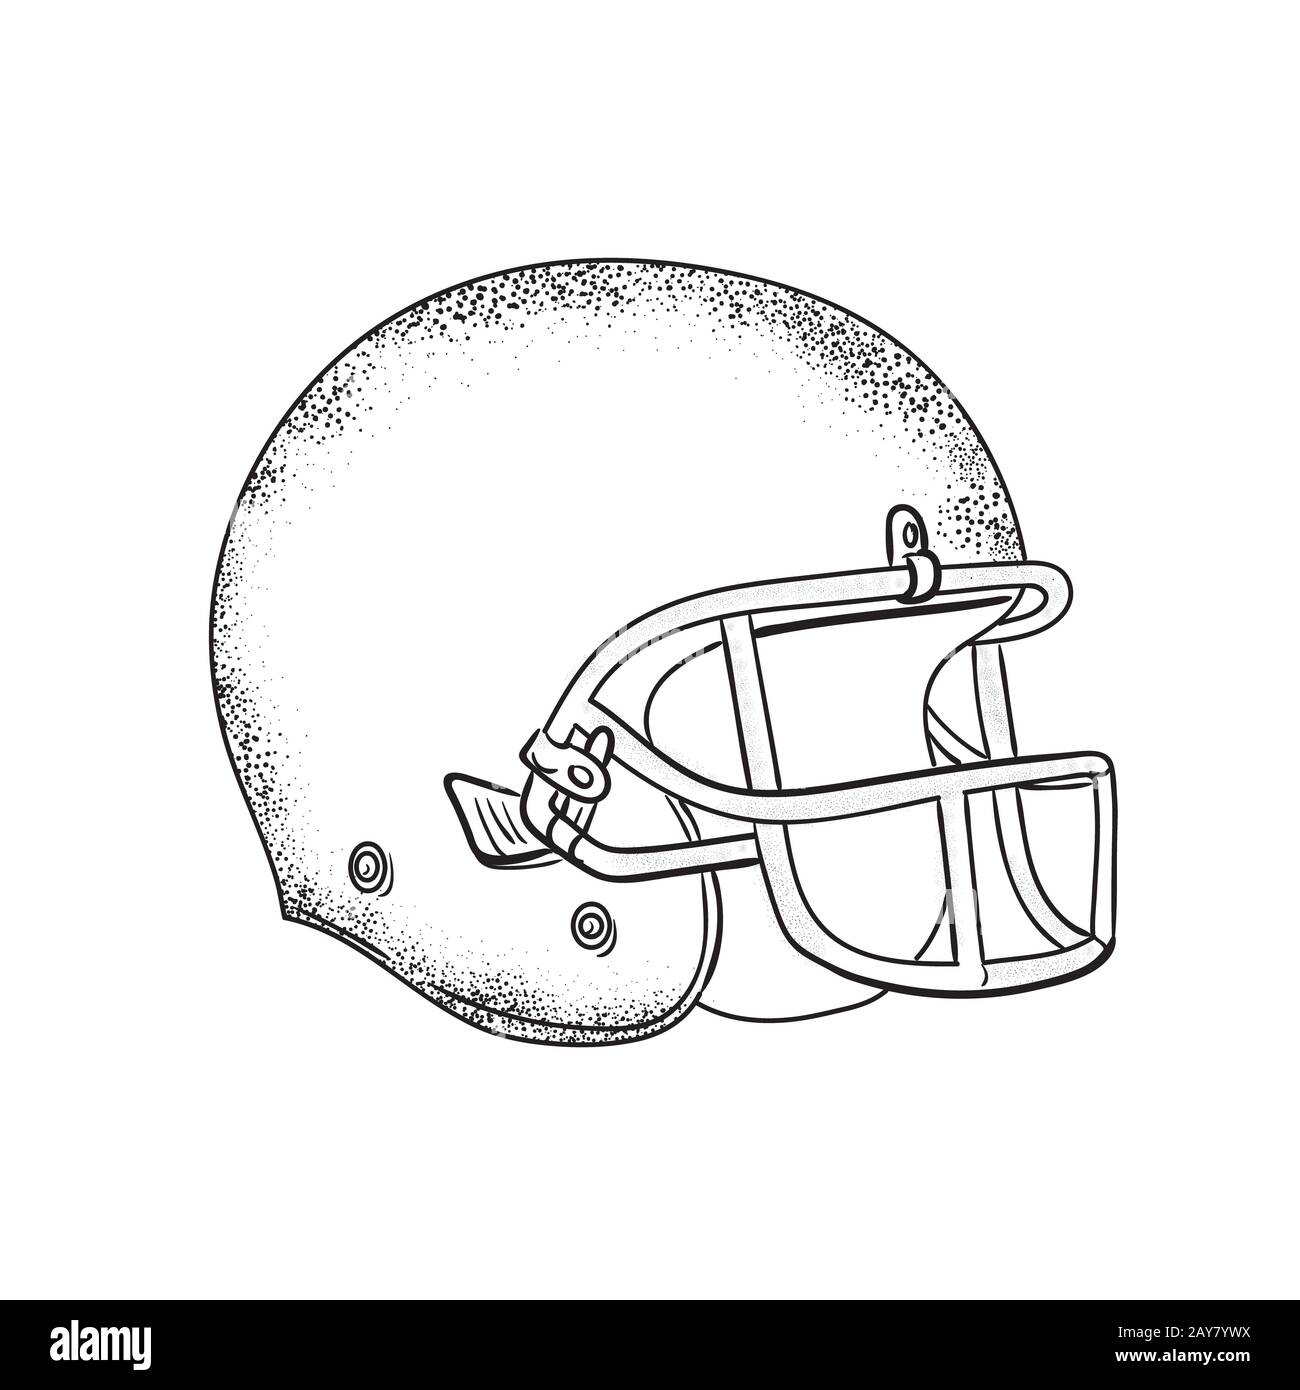 American Football Helmet Dessin en noir et blanc Banque D'Images